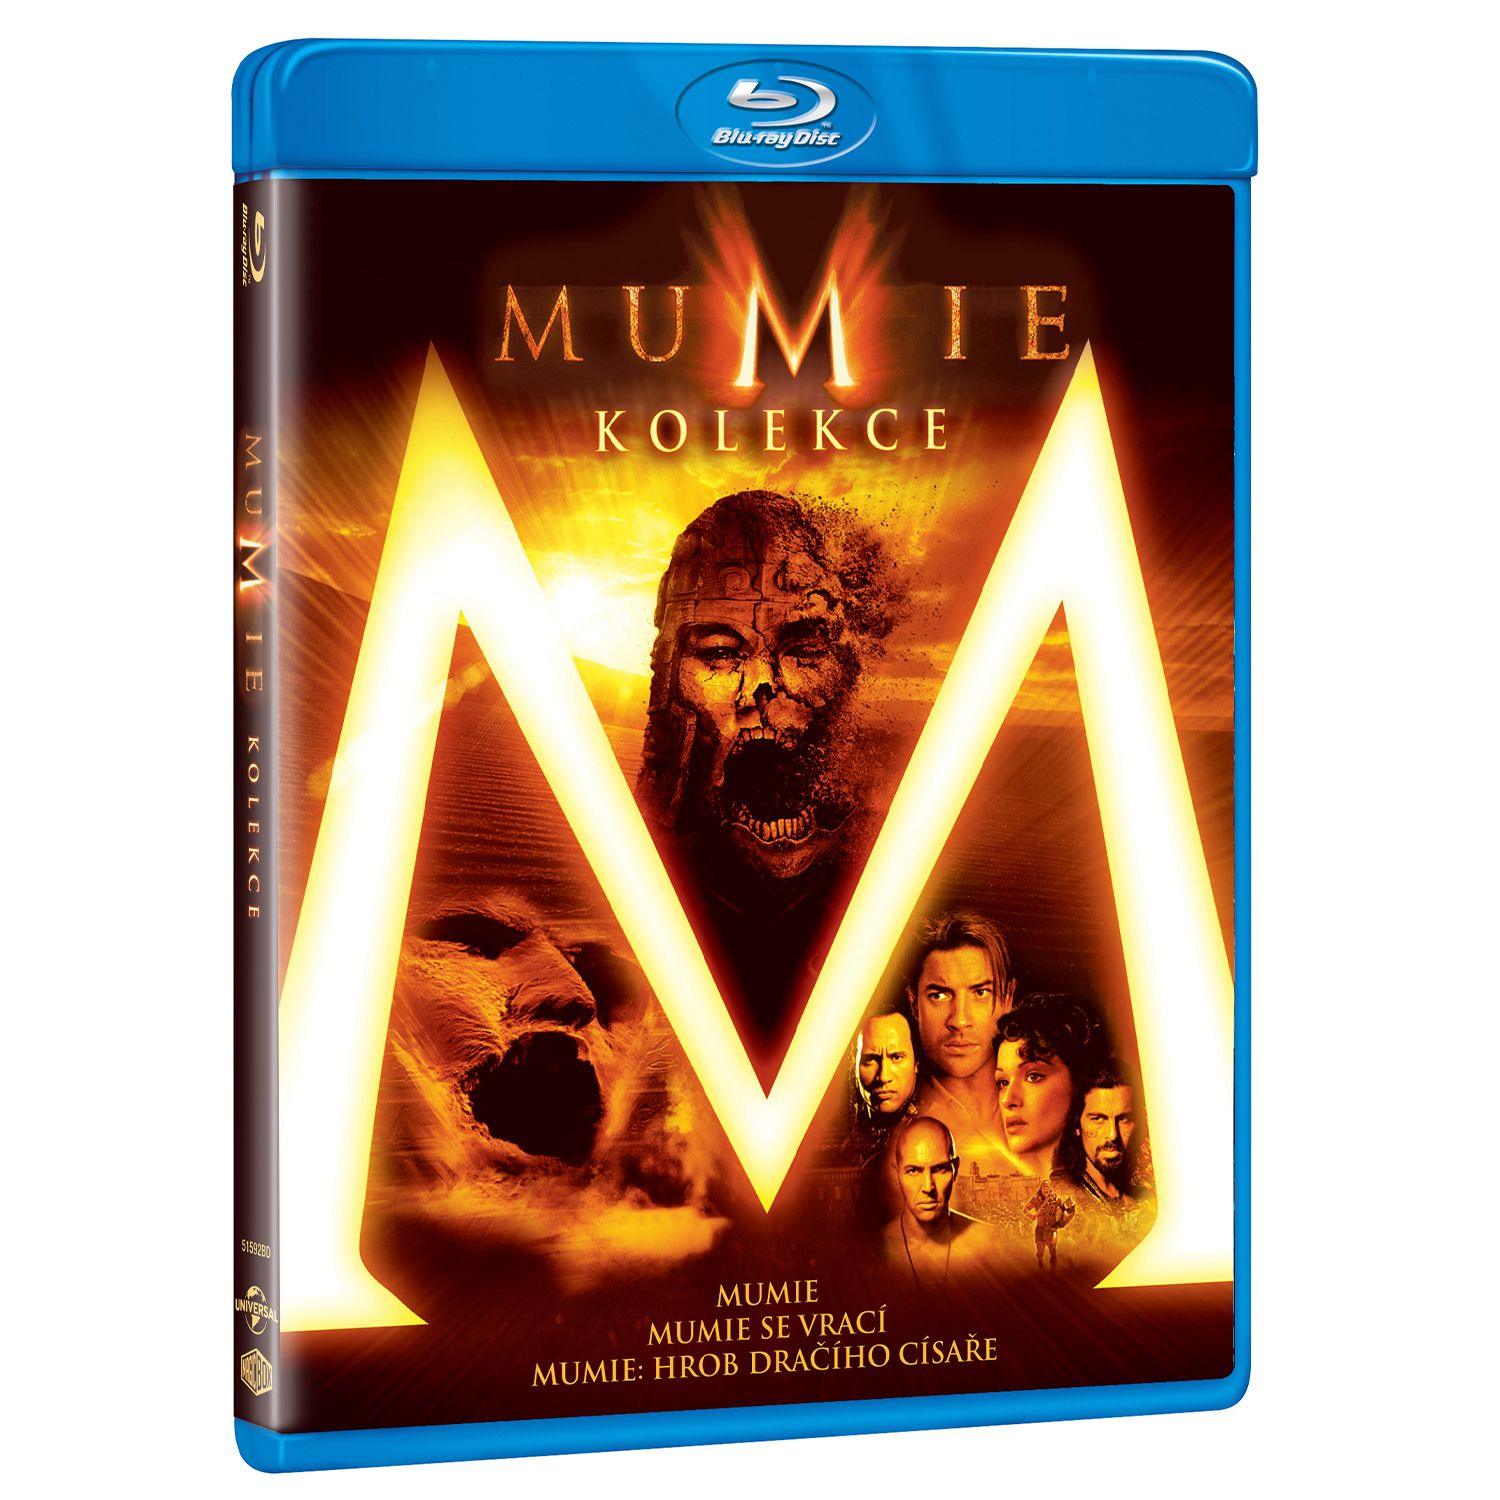 Мумия: Трилогия (3 Blu-ray)